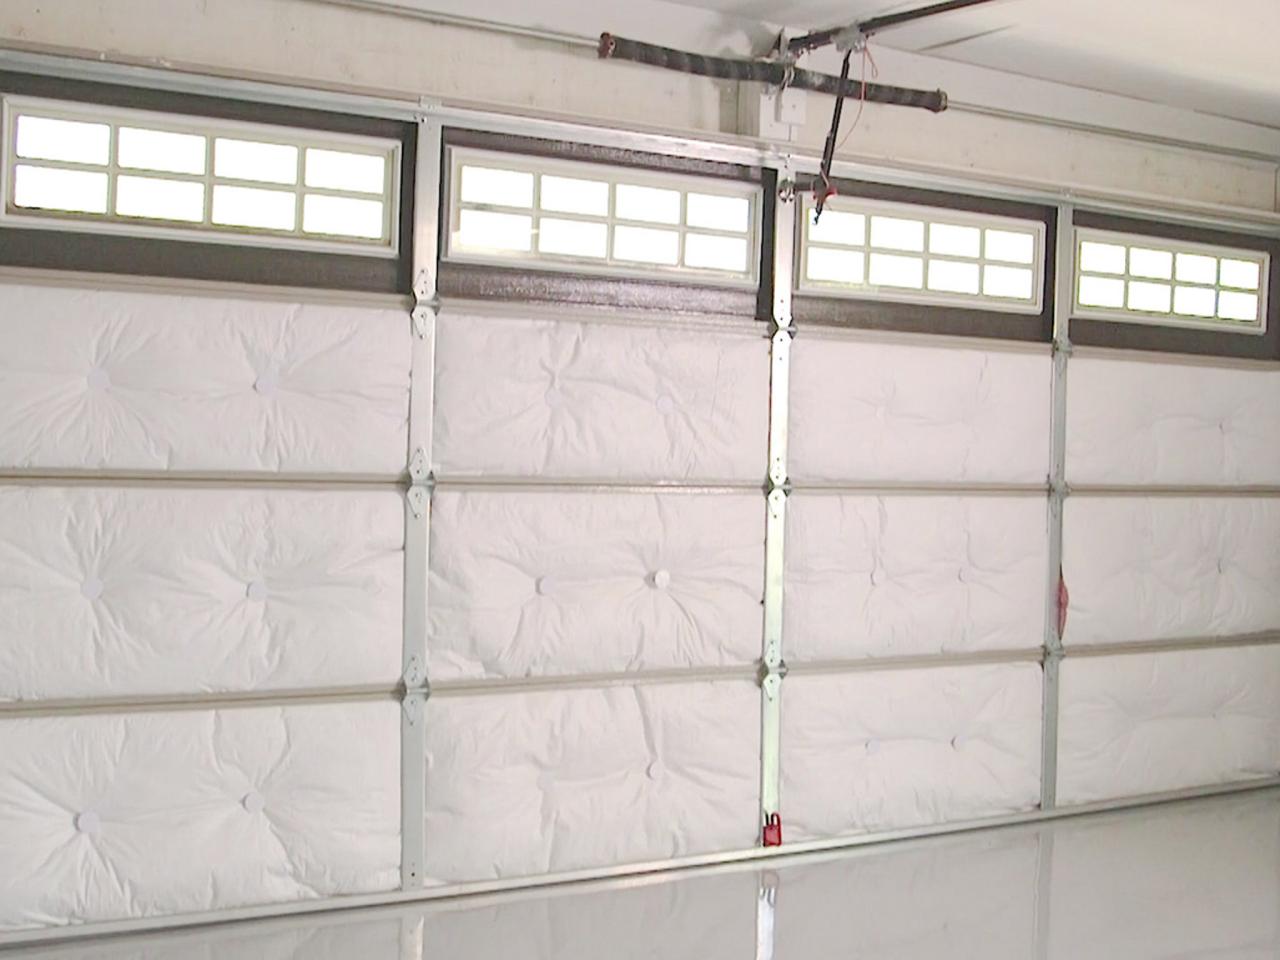 Unique Diy Garage Door Insulation Panels for Small Space